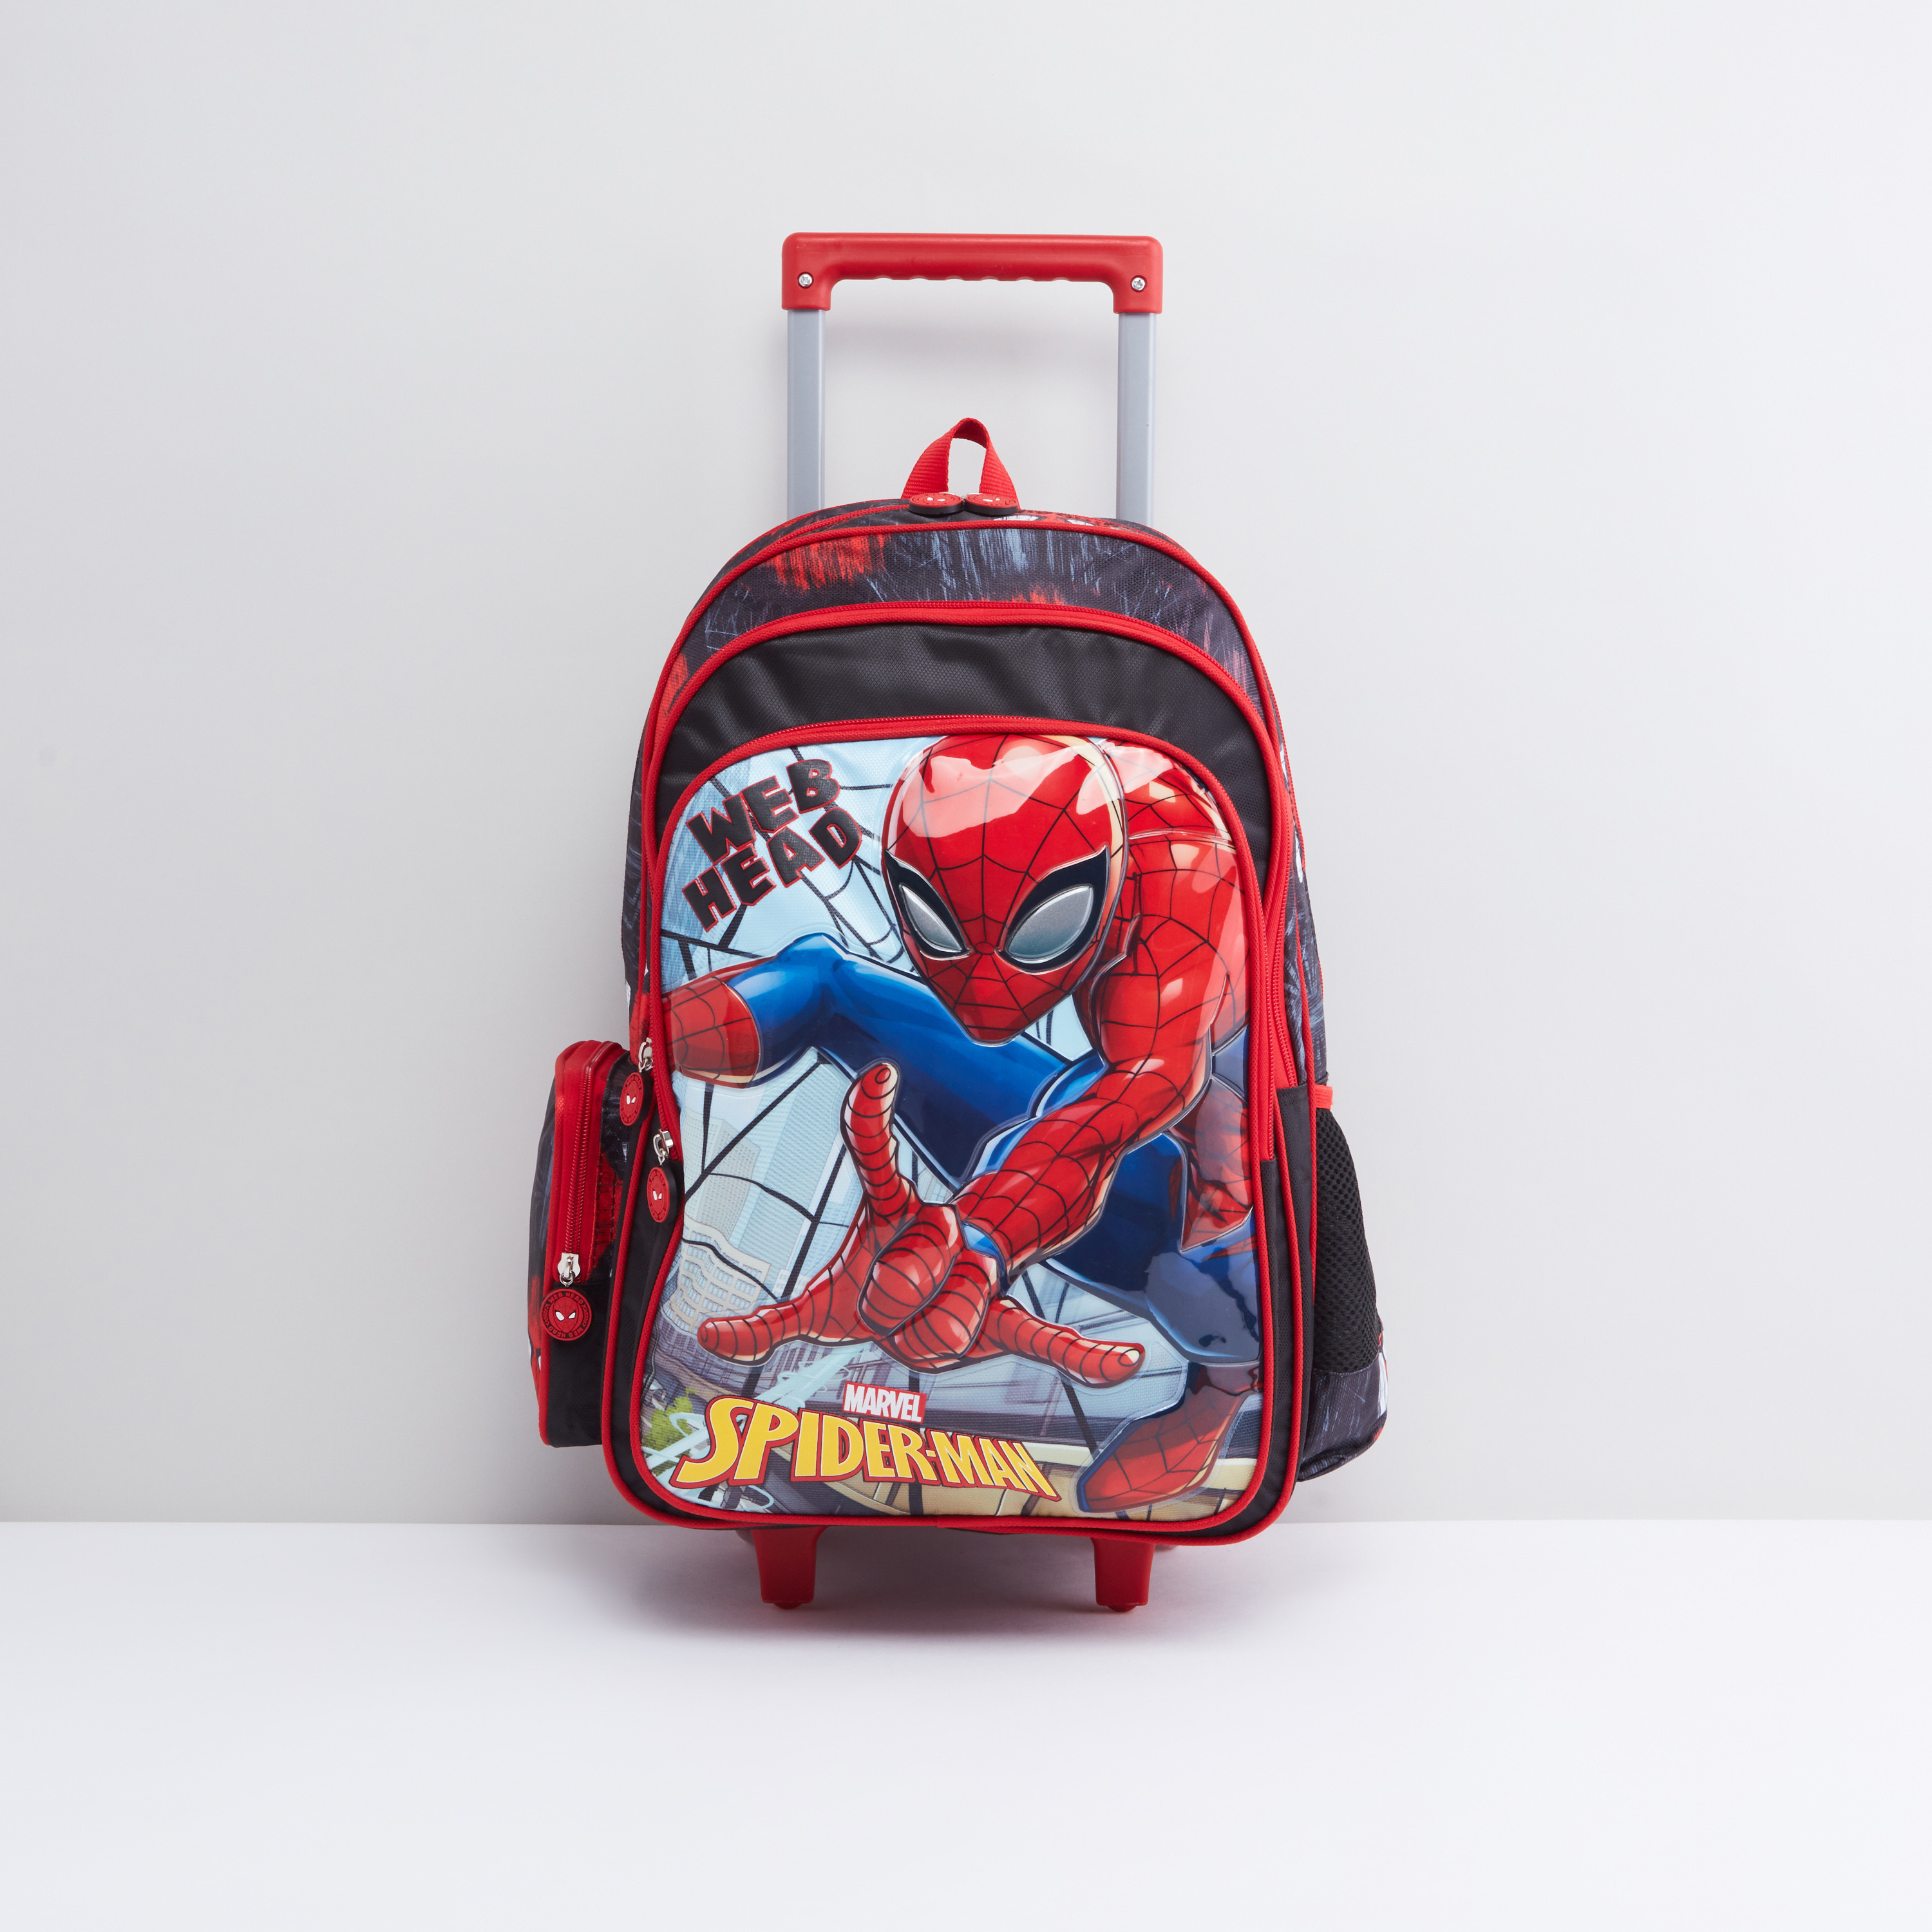 Marvel Ful Spiderman Web slinging kids 21 inch luggage - Walmart.com